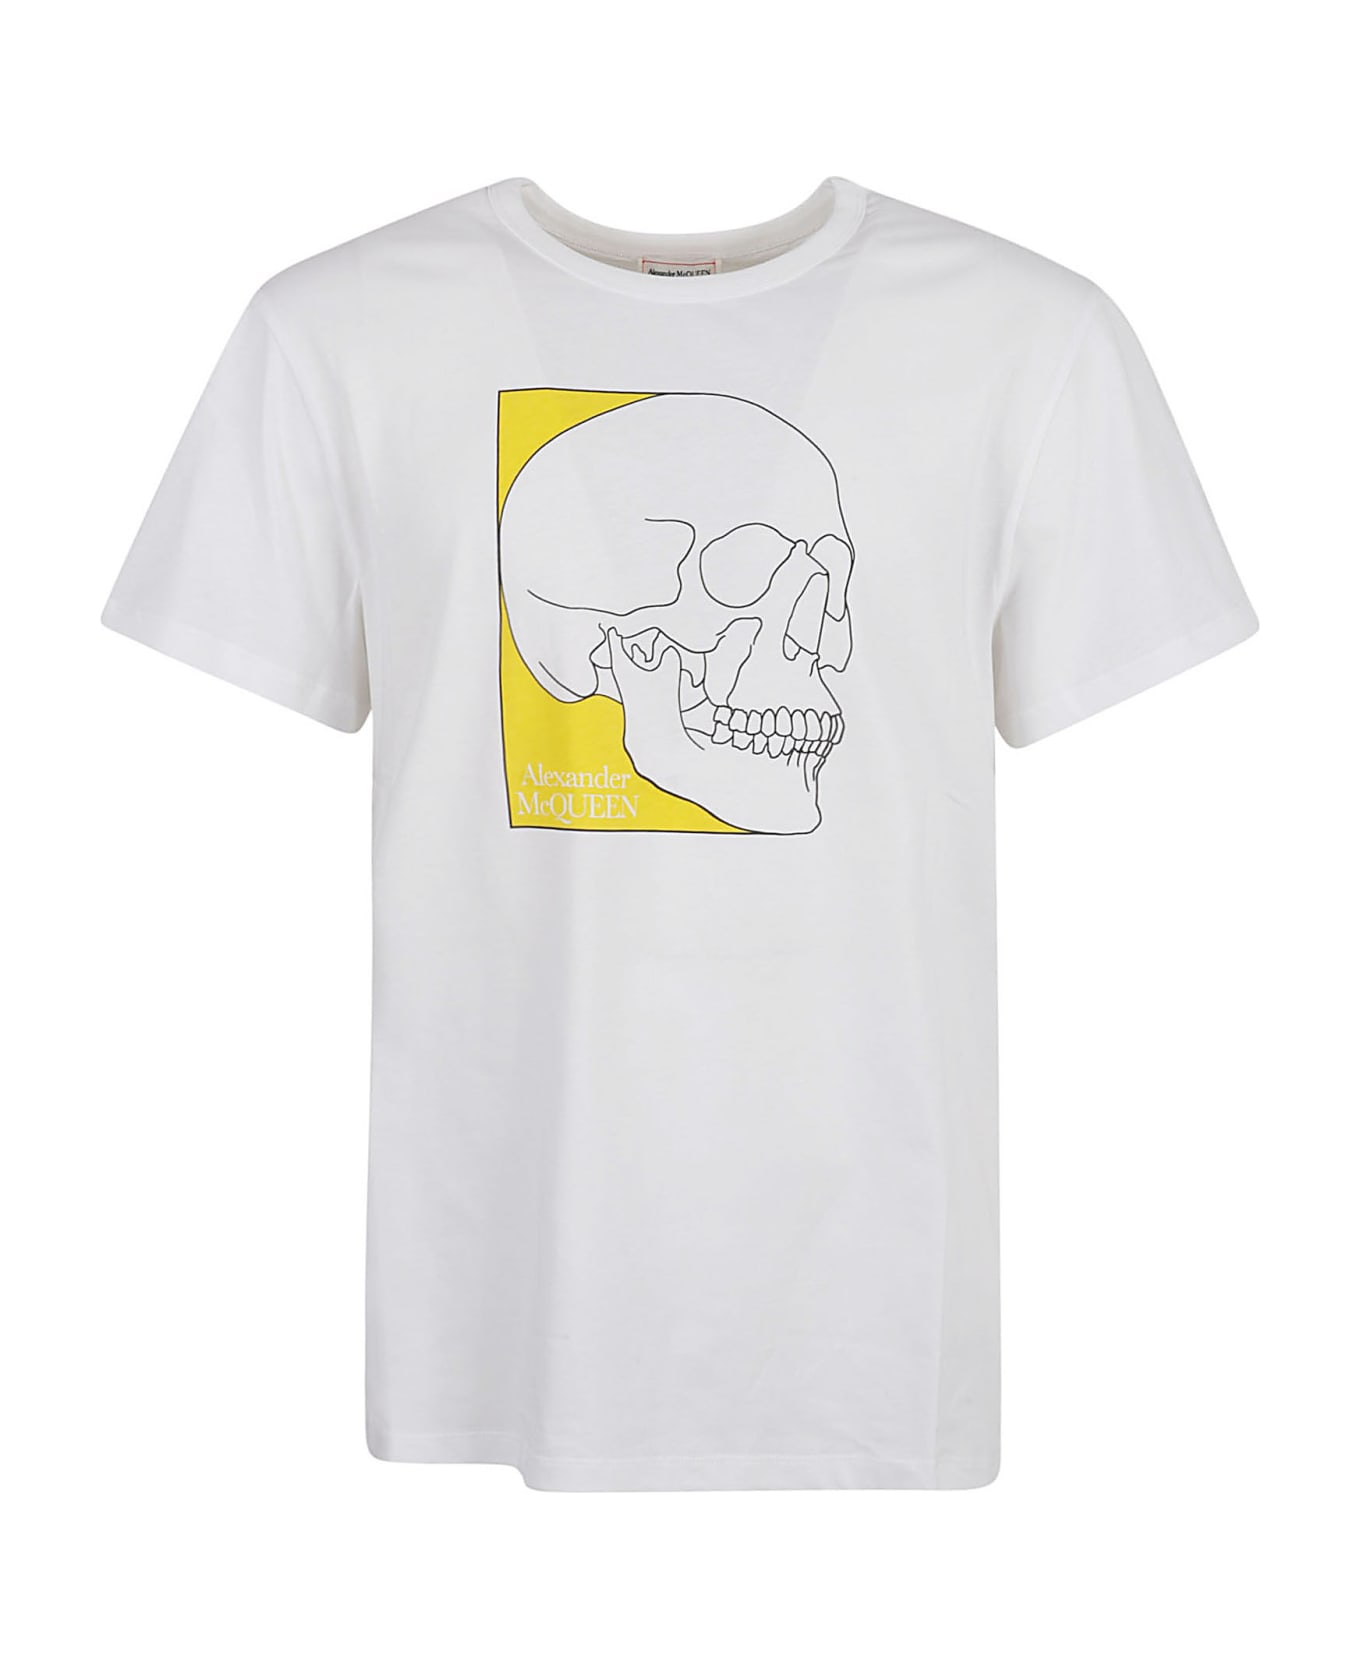 Alexander McQueen Skull Logo Print T-shirt - White/yellow